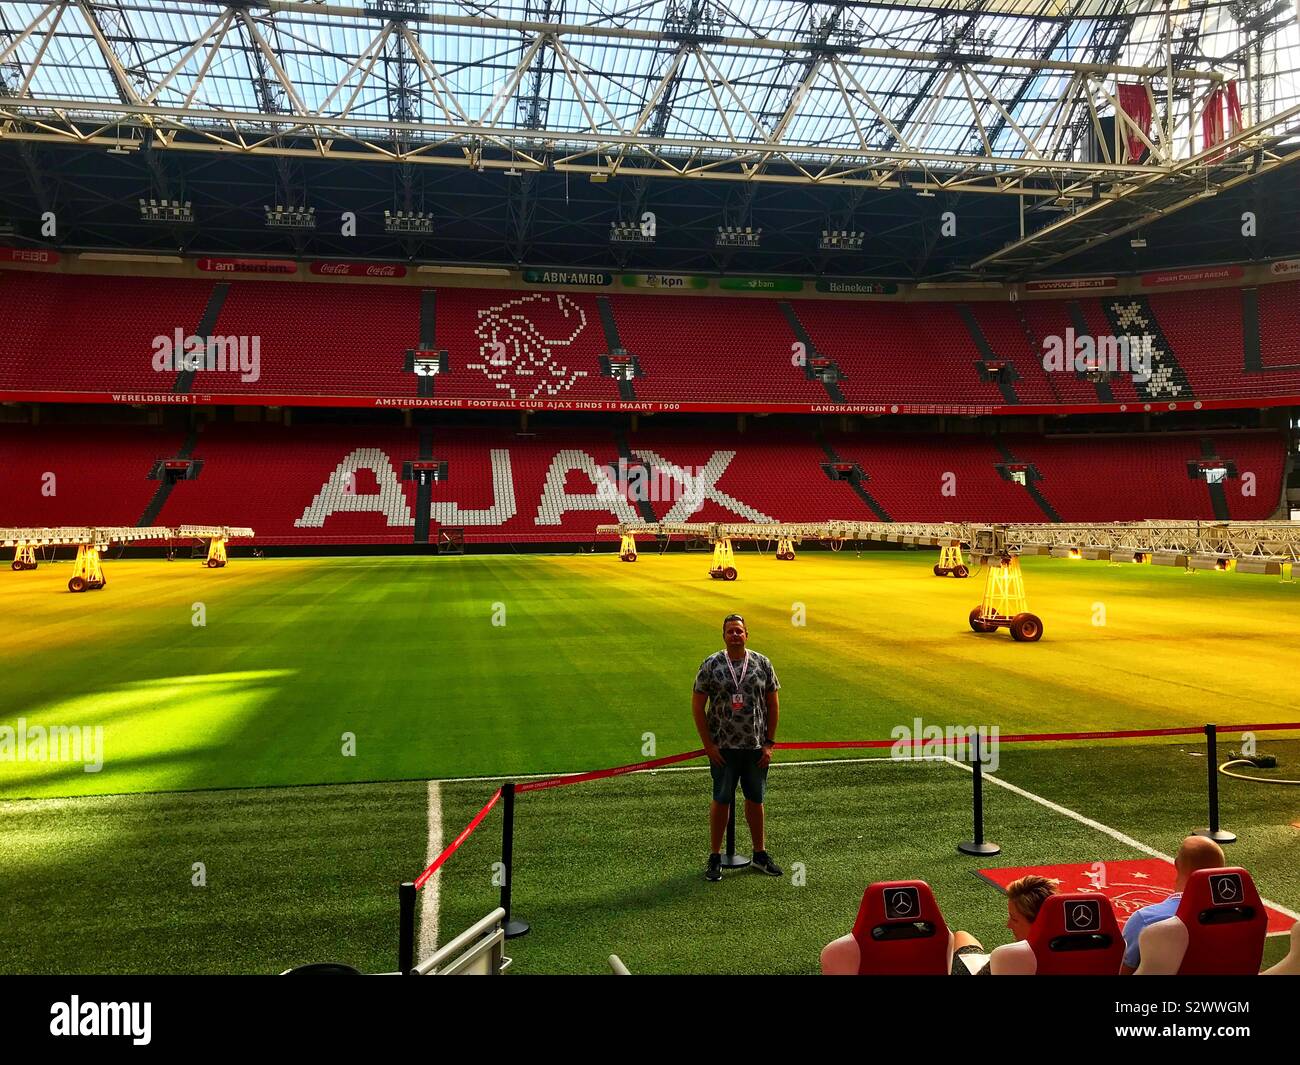 Ajax stadium tour Stock Photo